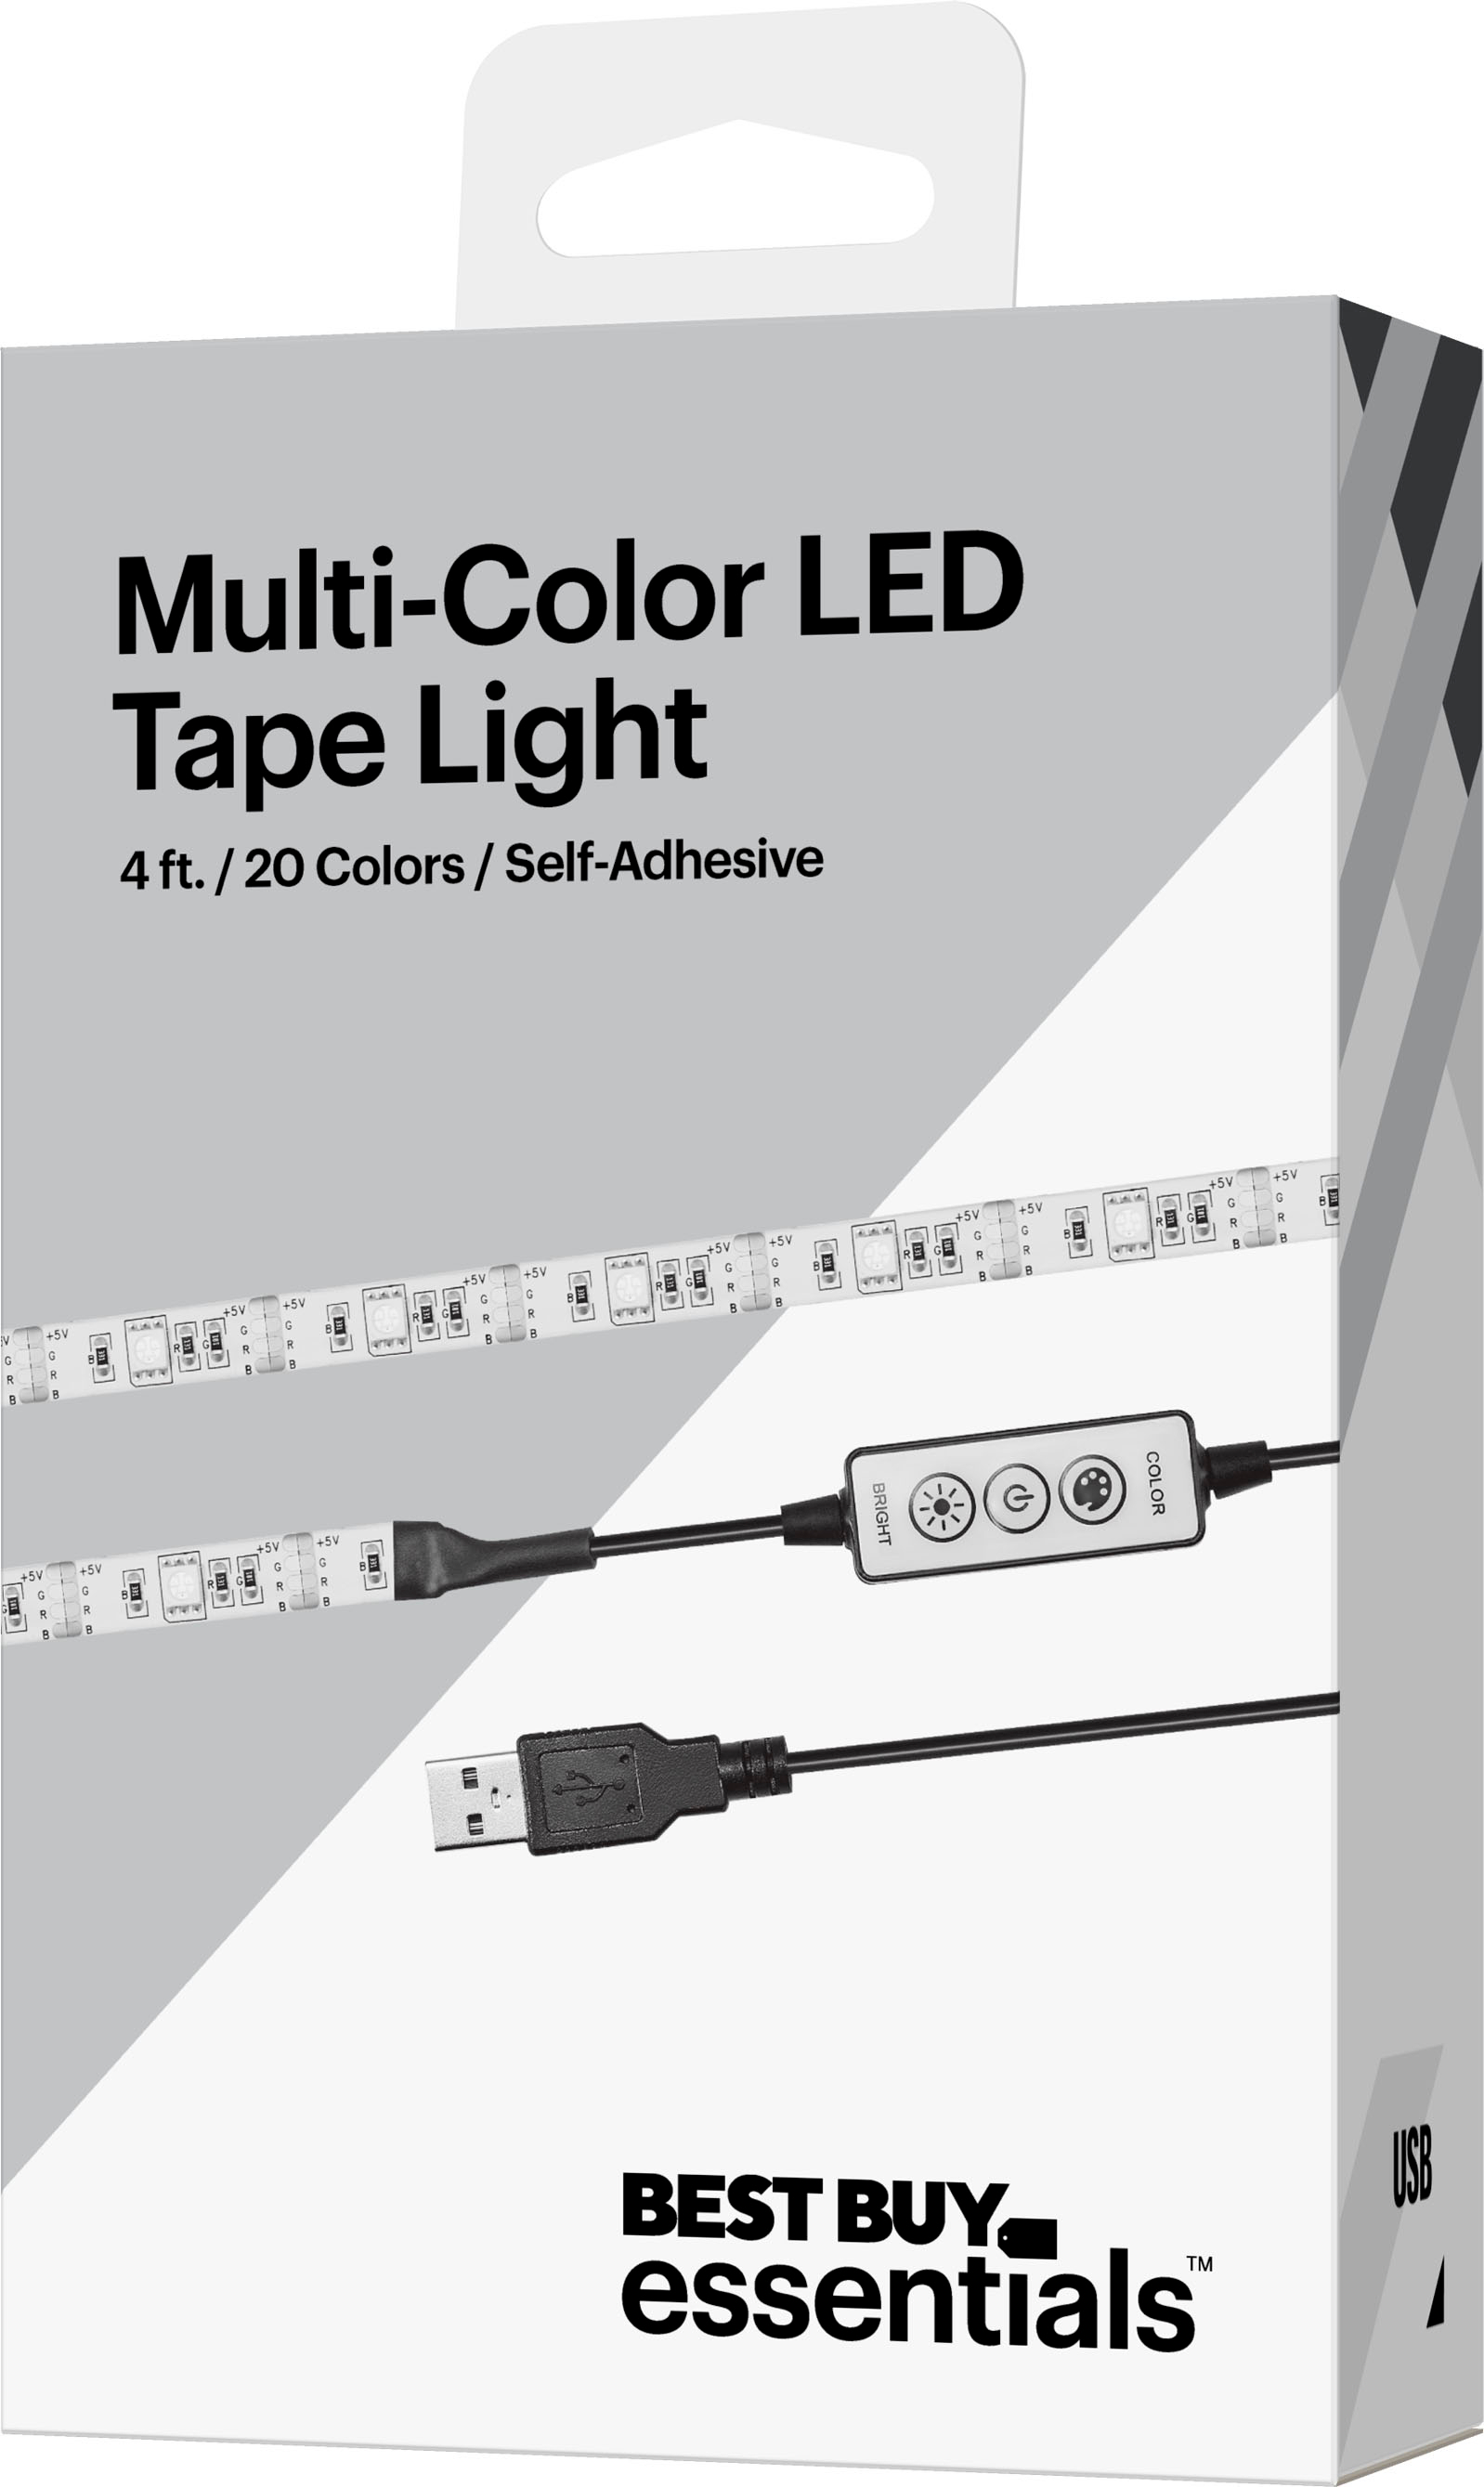 Best Buy: Best Buy essentials™ 4' LED Light Strip Multi-Color BE-LED4RGB19